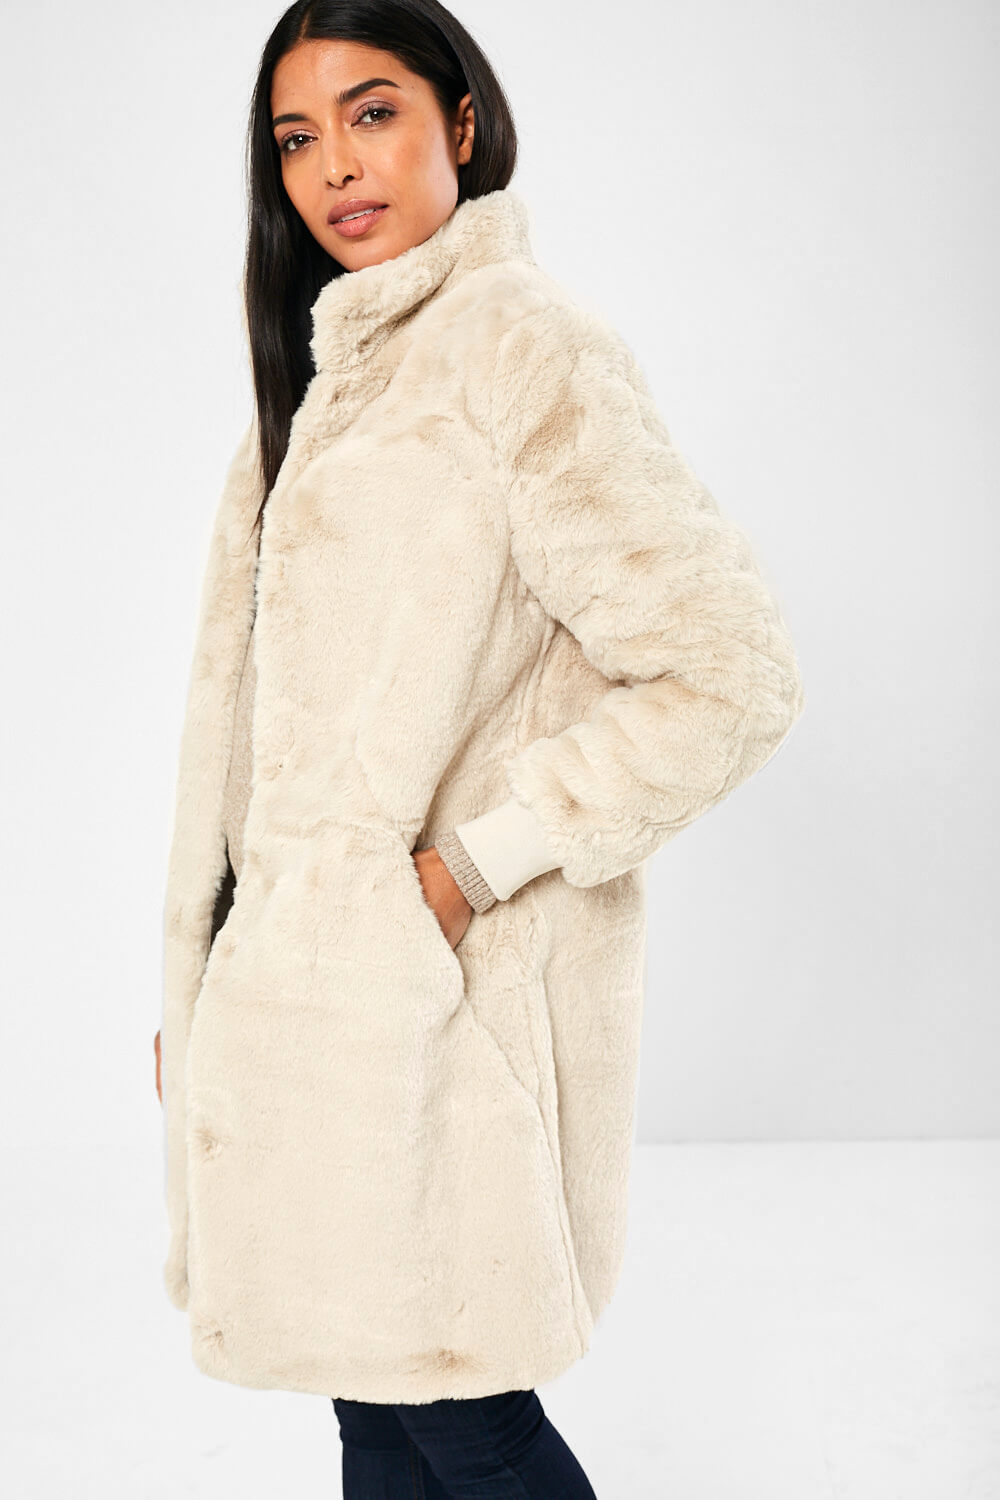 moda fur coat,hrdsindia.org